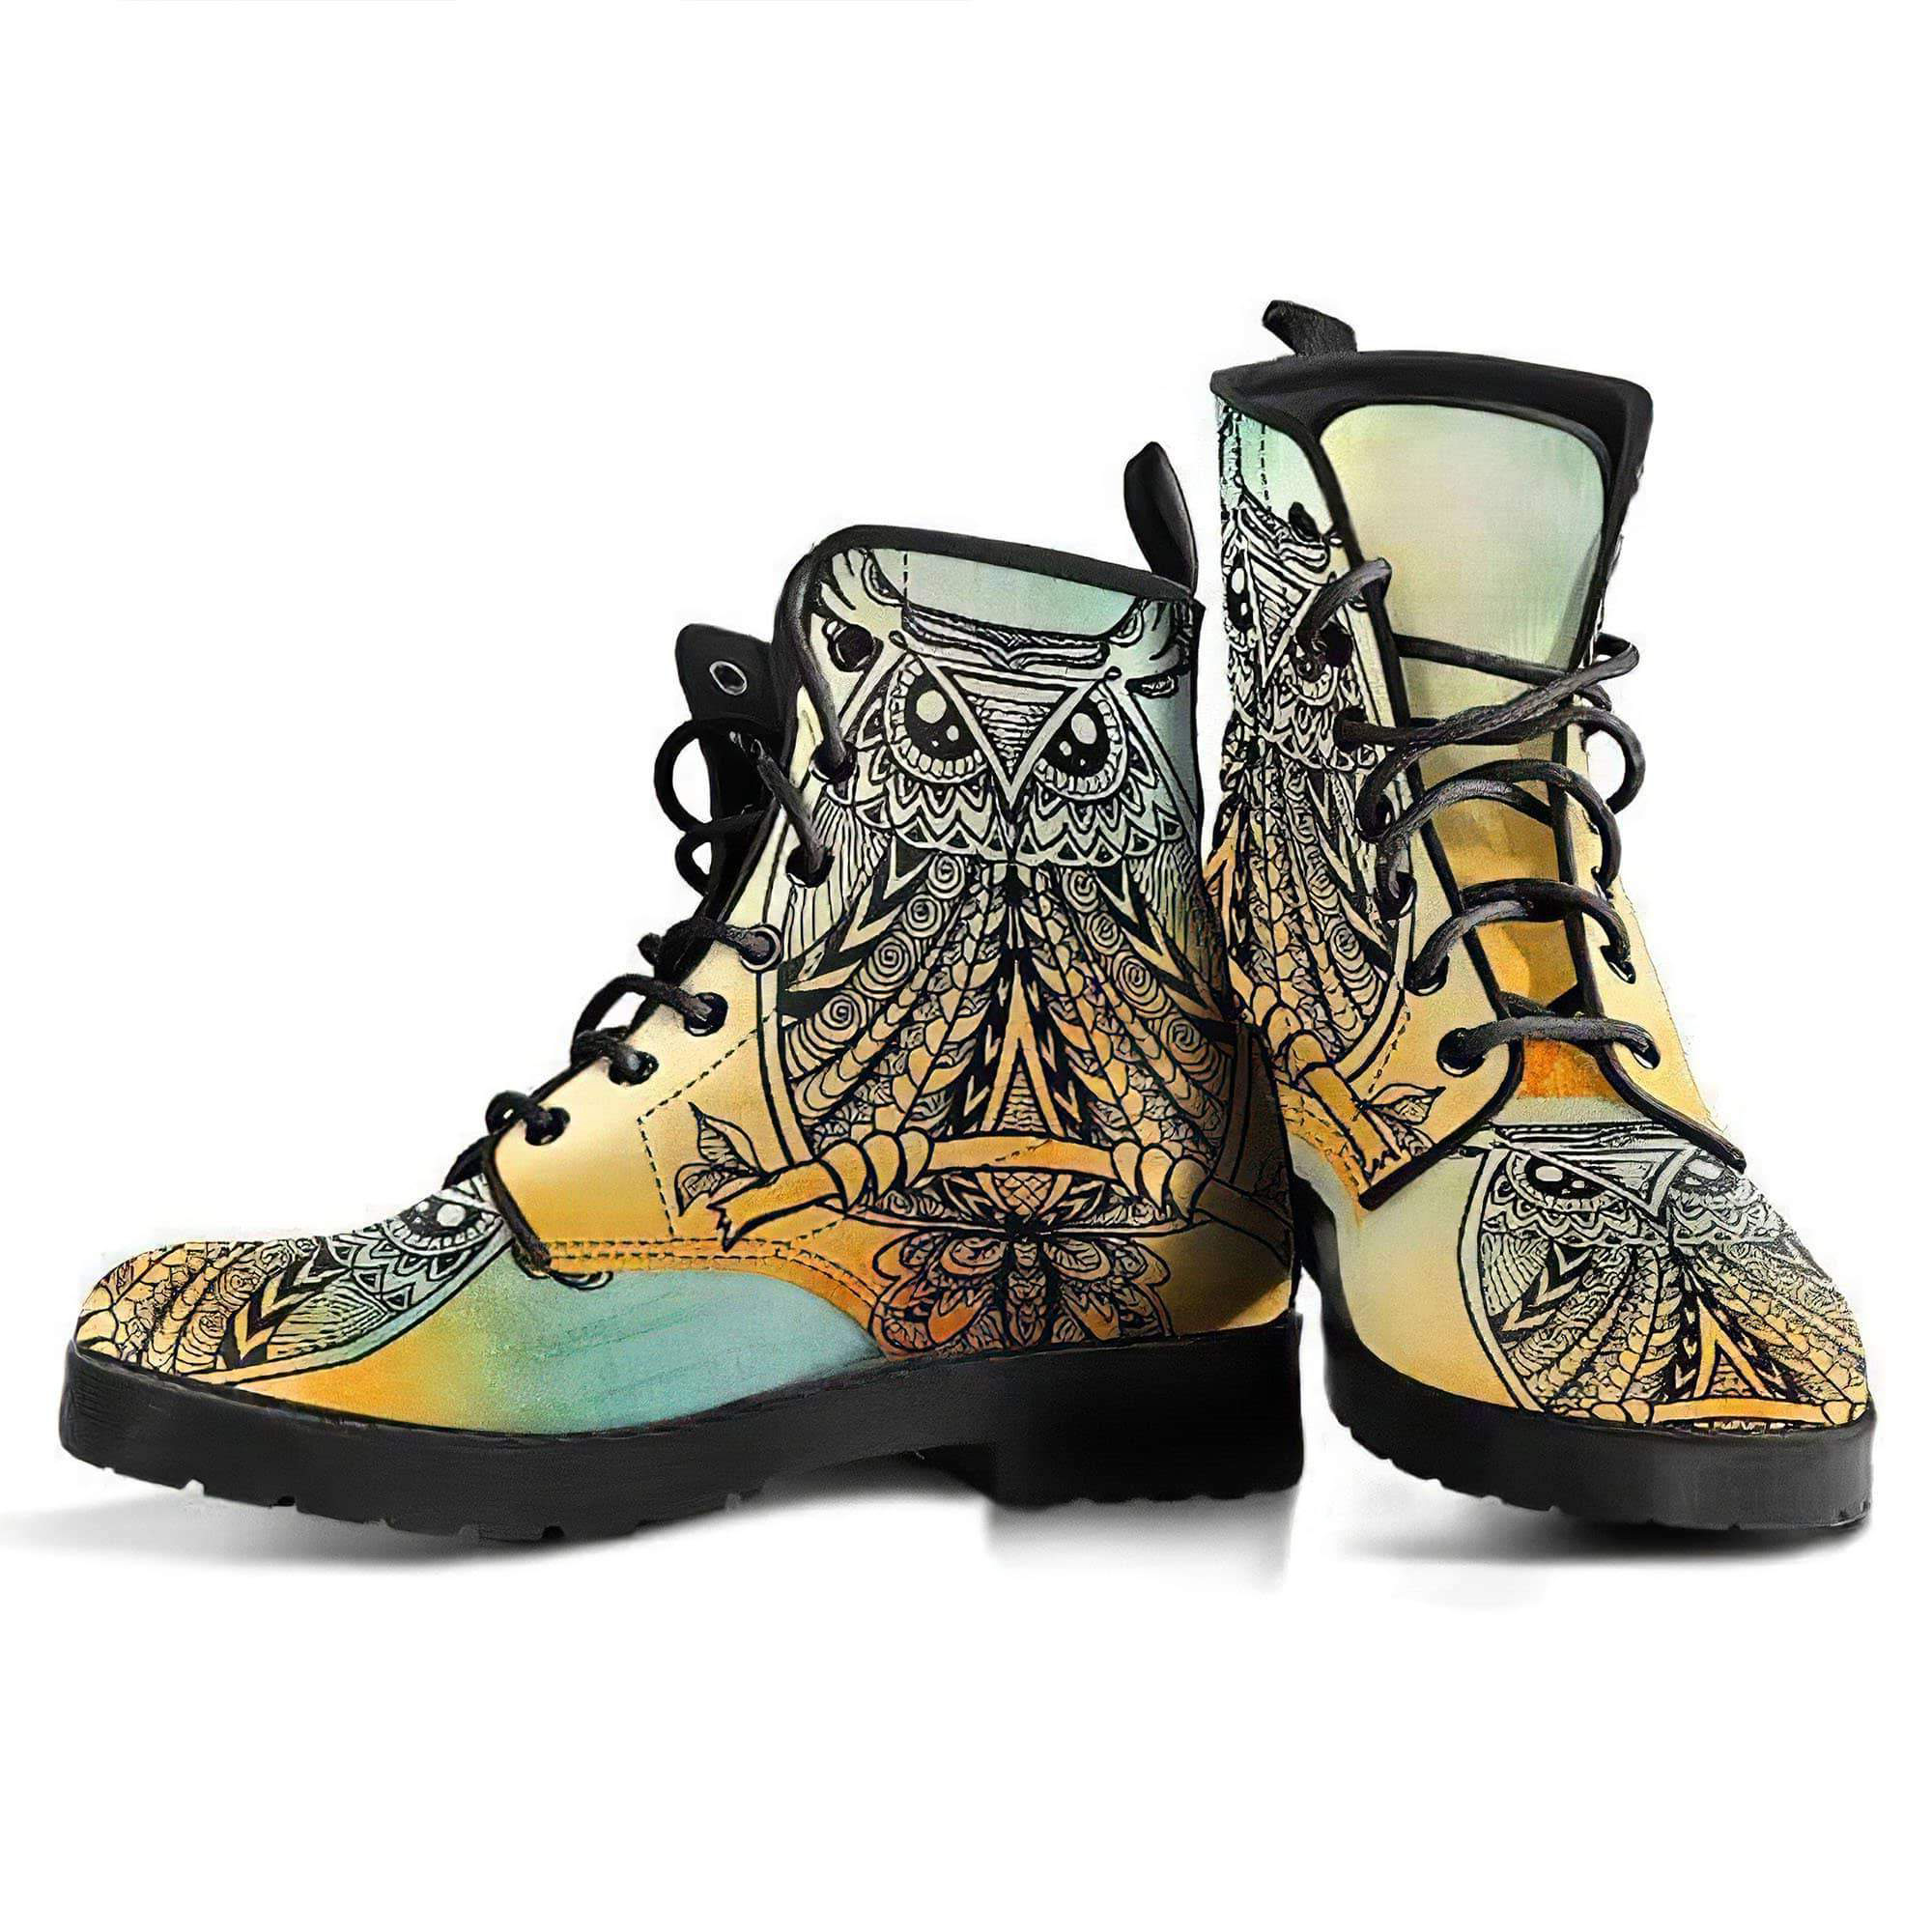 zen-2-handcrafted-boots-women-s-leather-boots-12051989037117.jpg